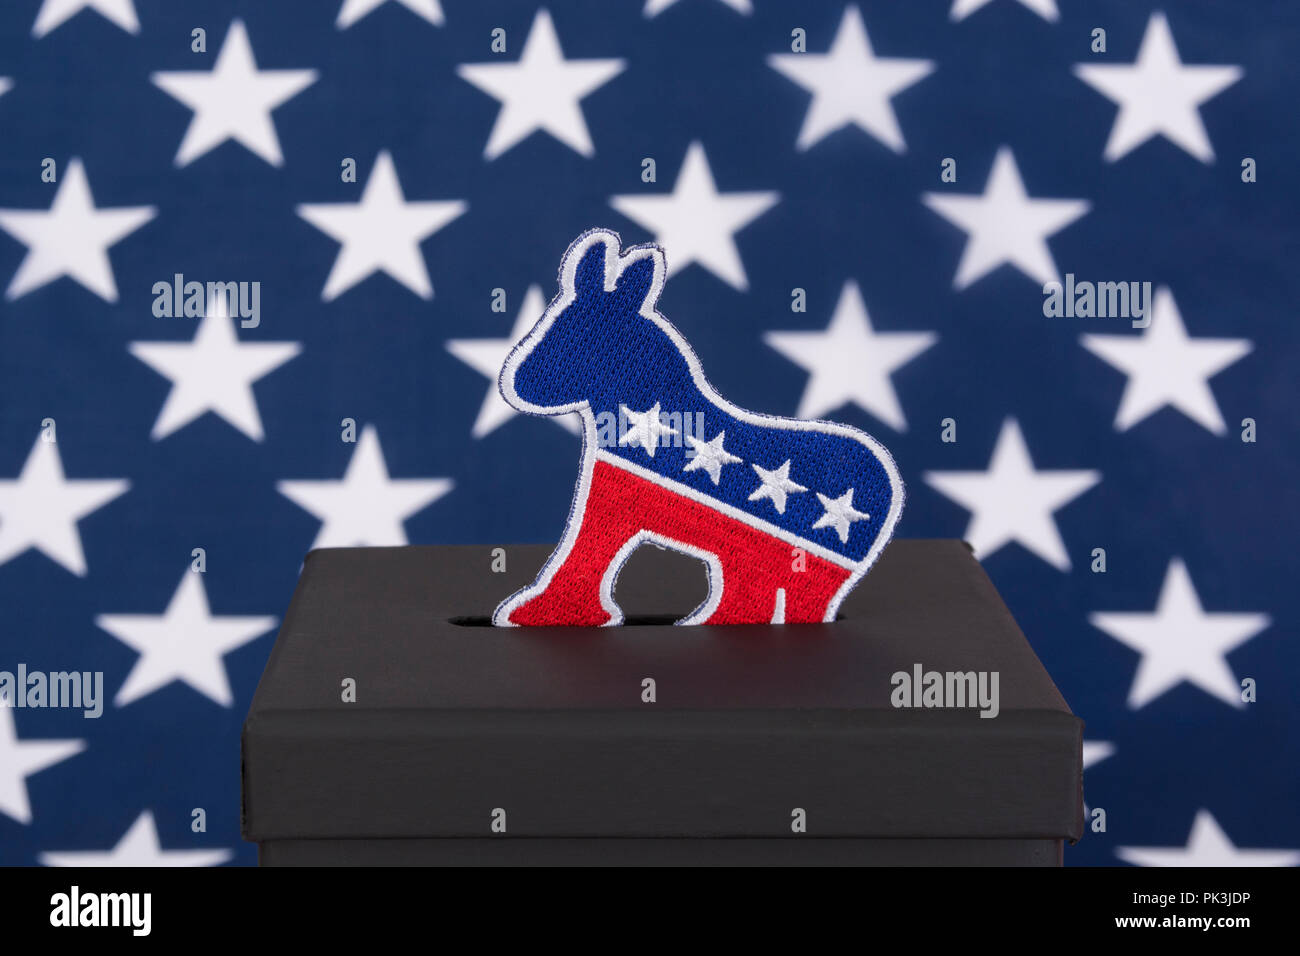 2022 US Midterm Election America & 2024 Presidential election USA. Democrat Party / democrat donkey logo & ballot box, Democrats 2022, Super Tuesday. Stock Photo